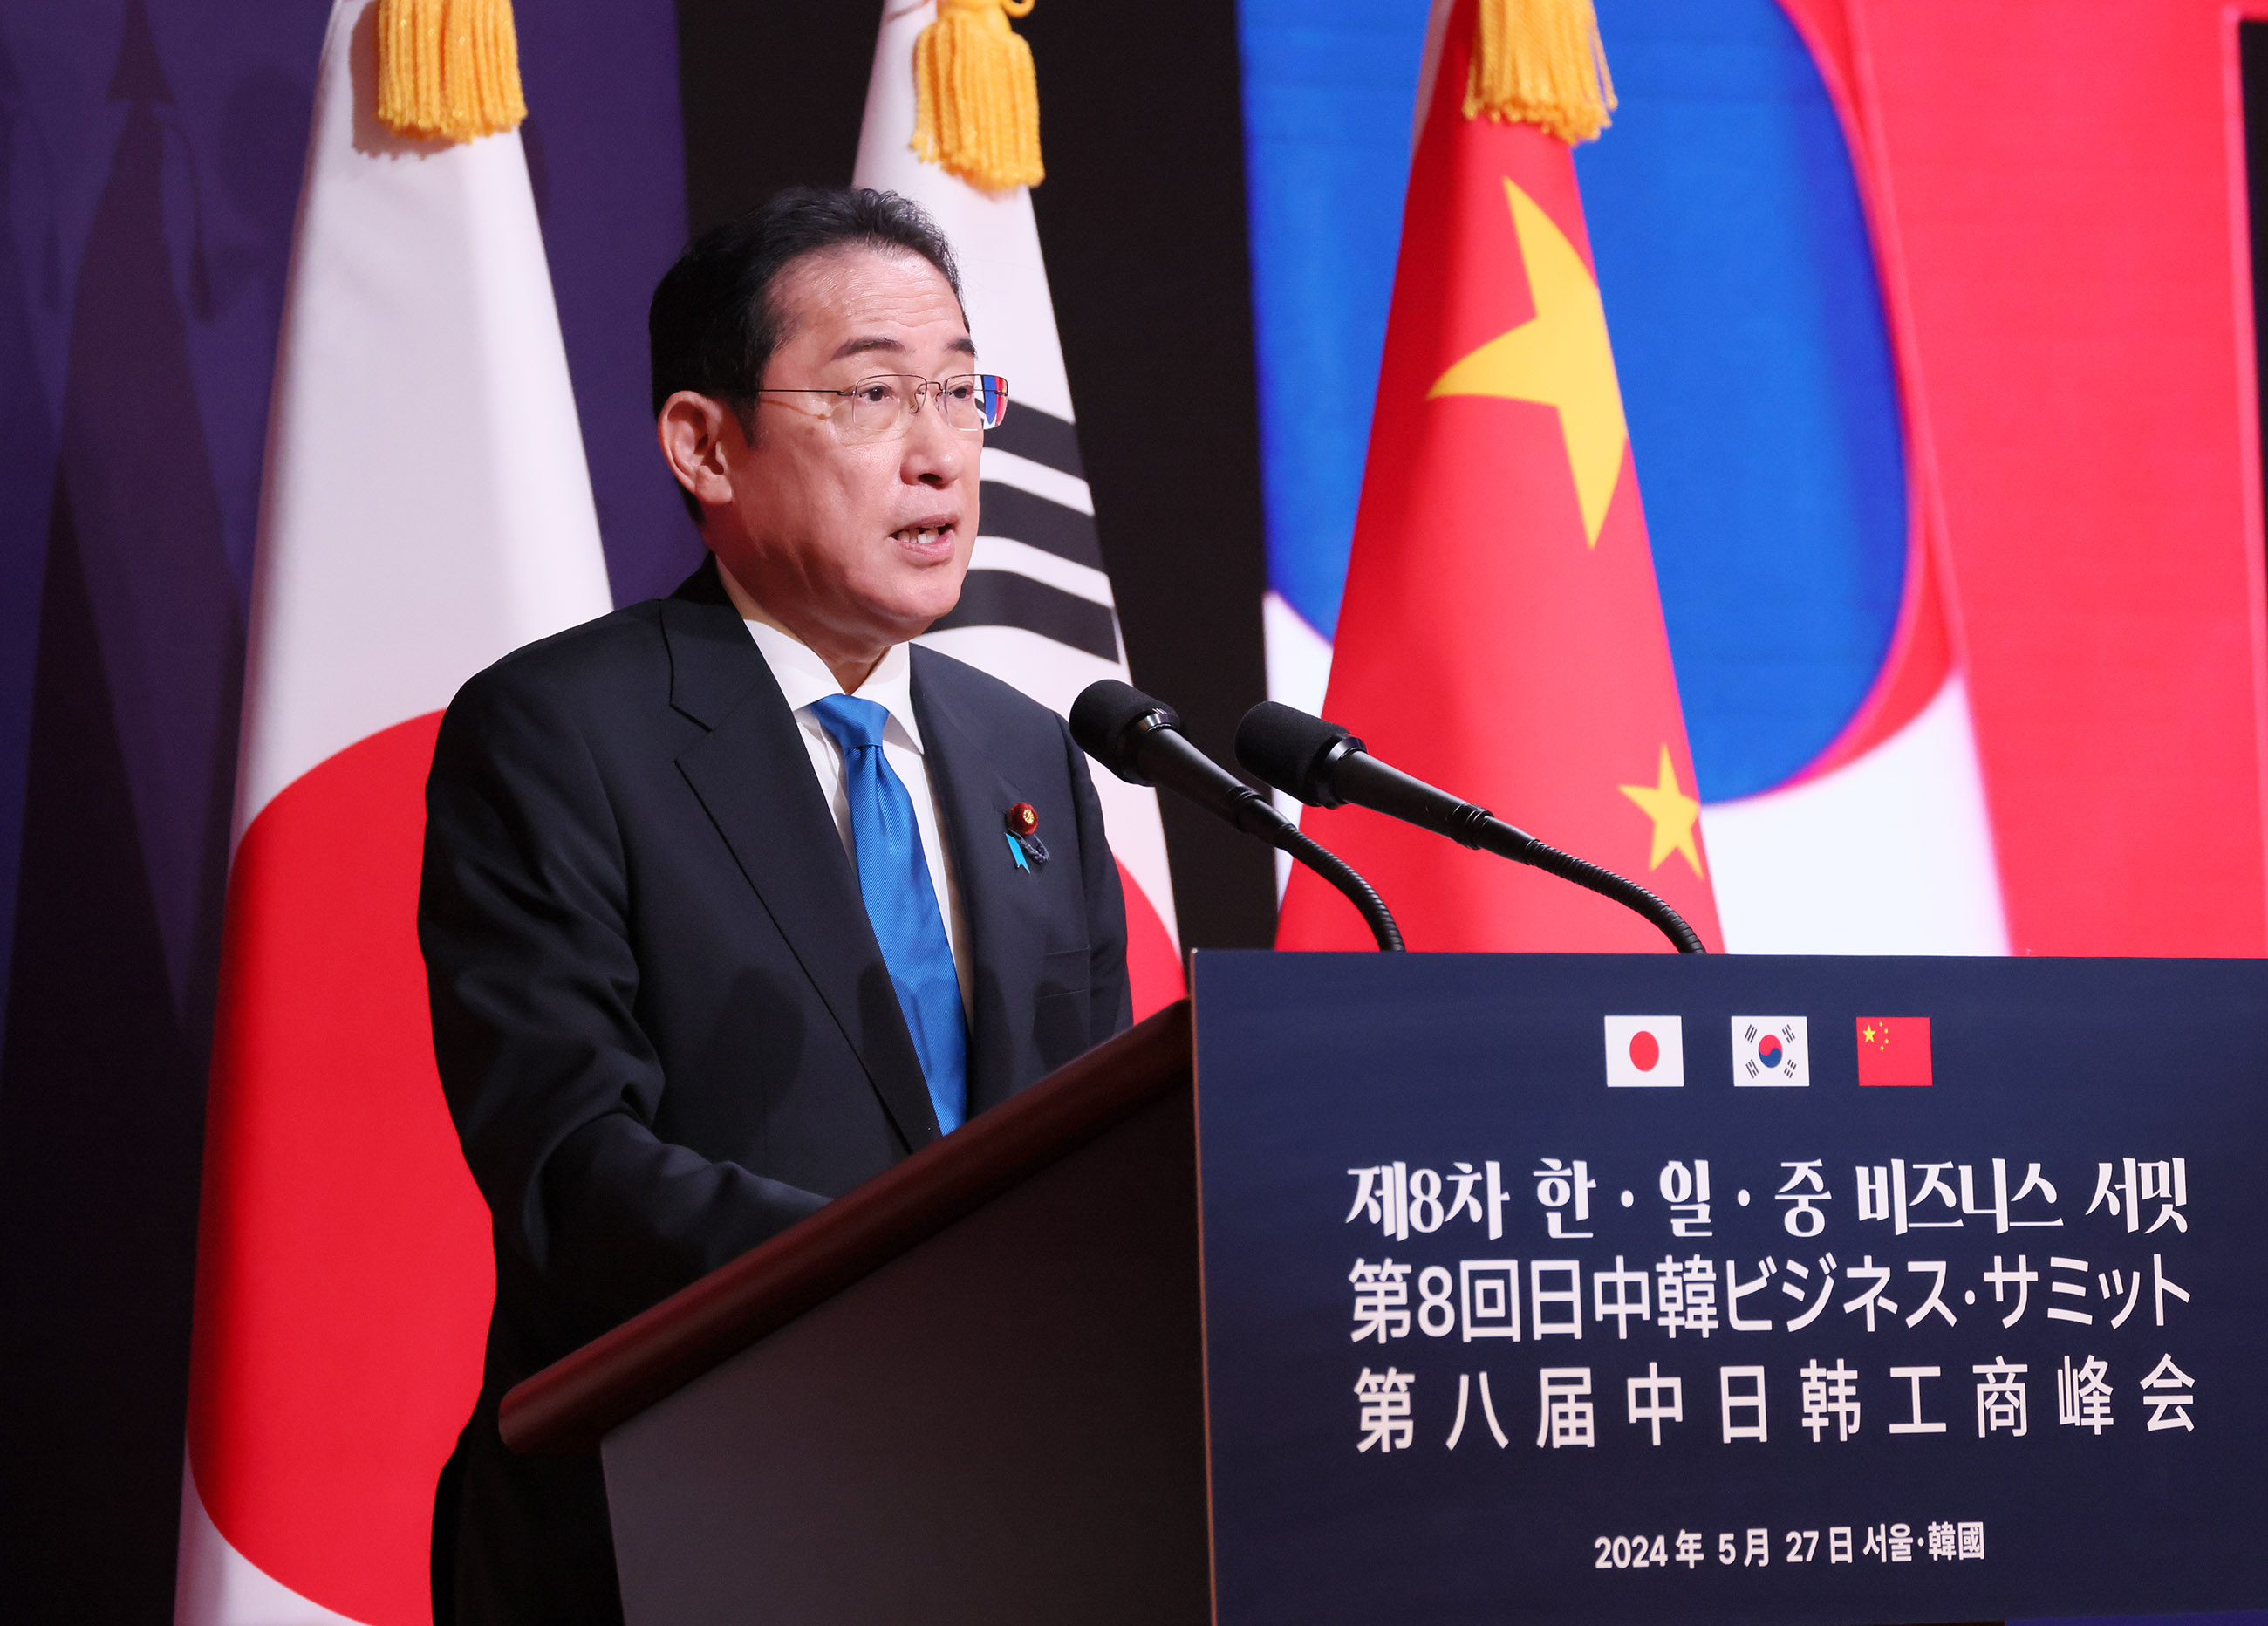 Prime Minister Kishida attending the Japan-China-ROK Business Summit (4)